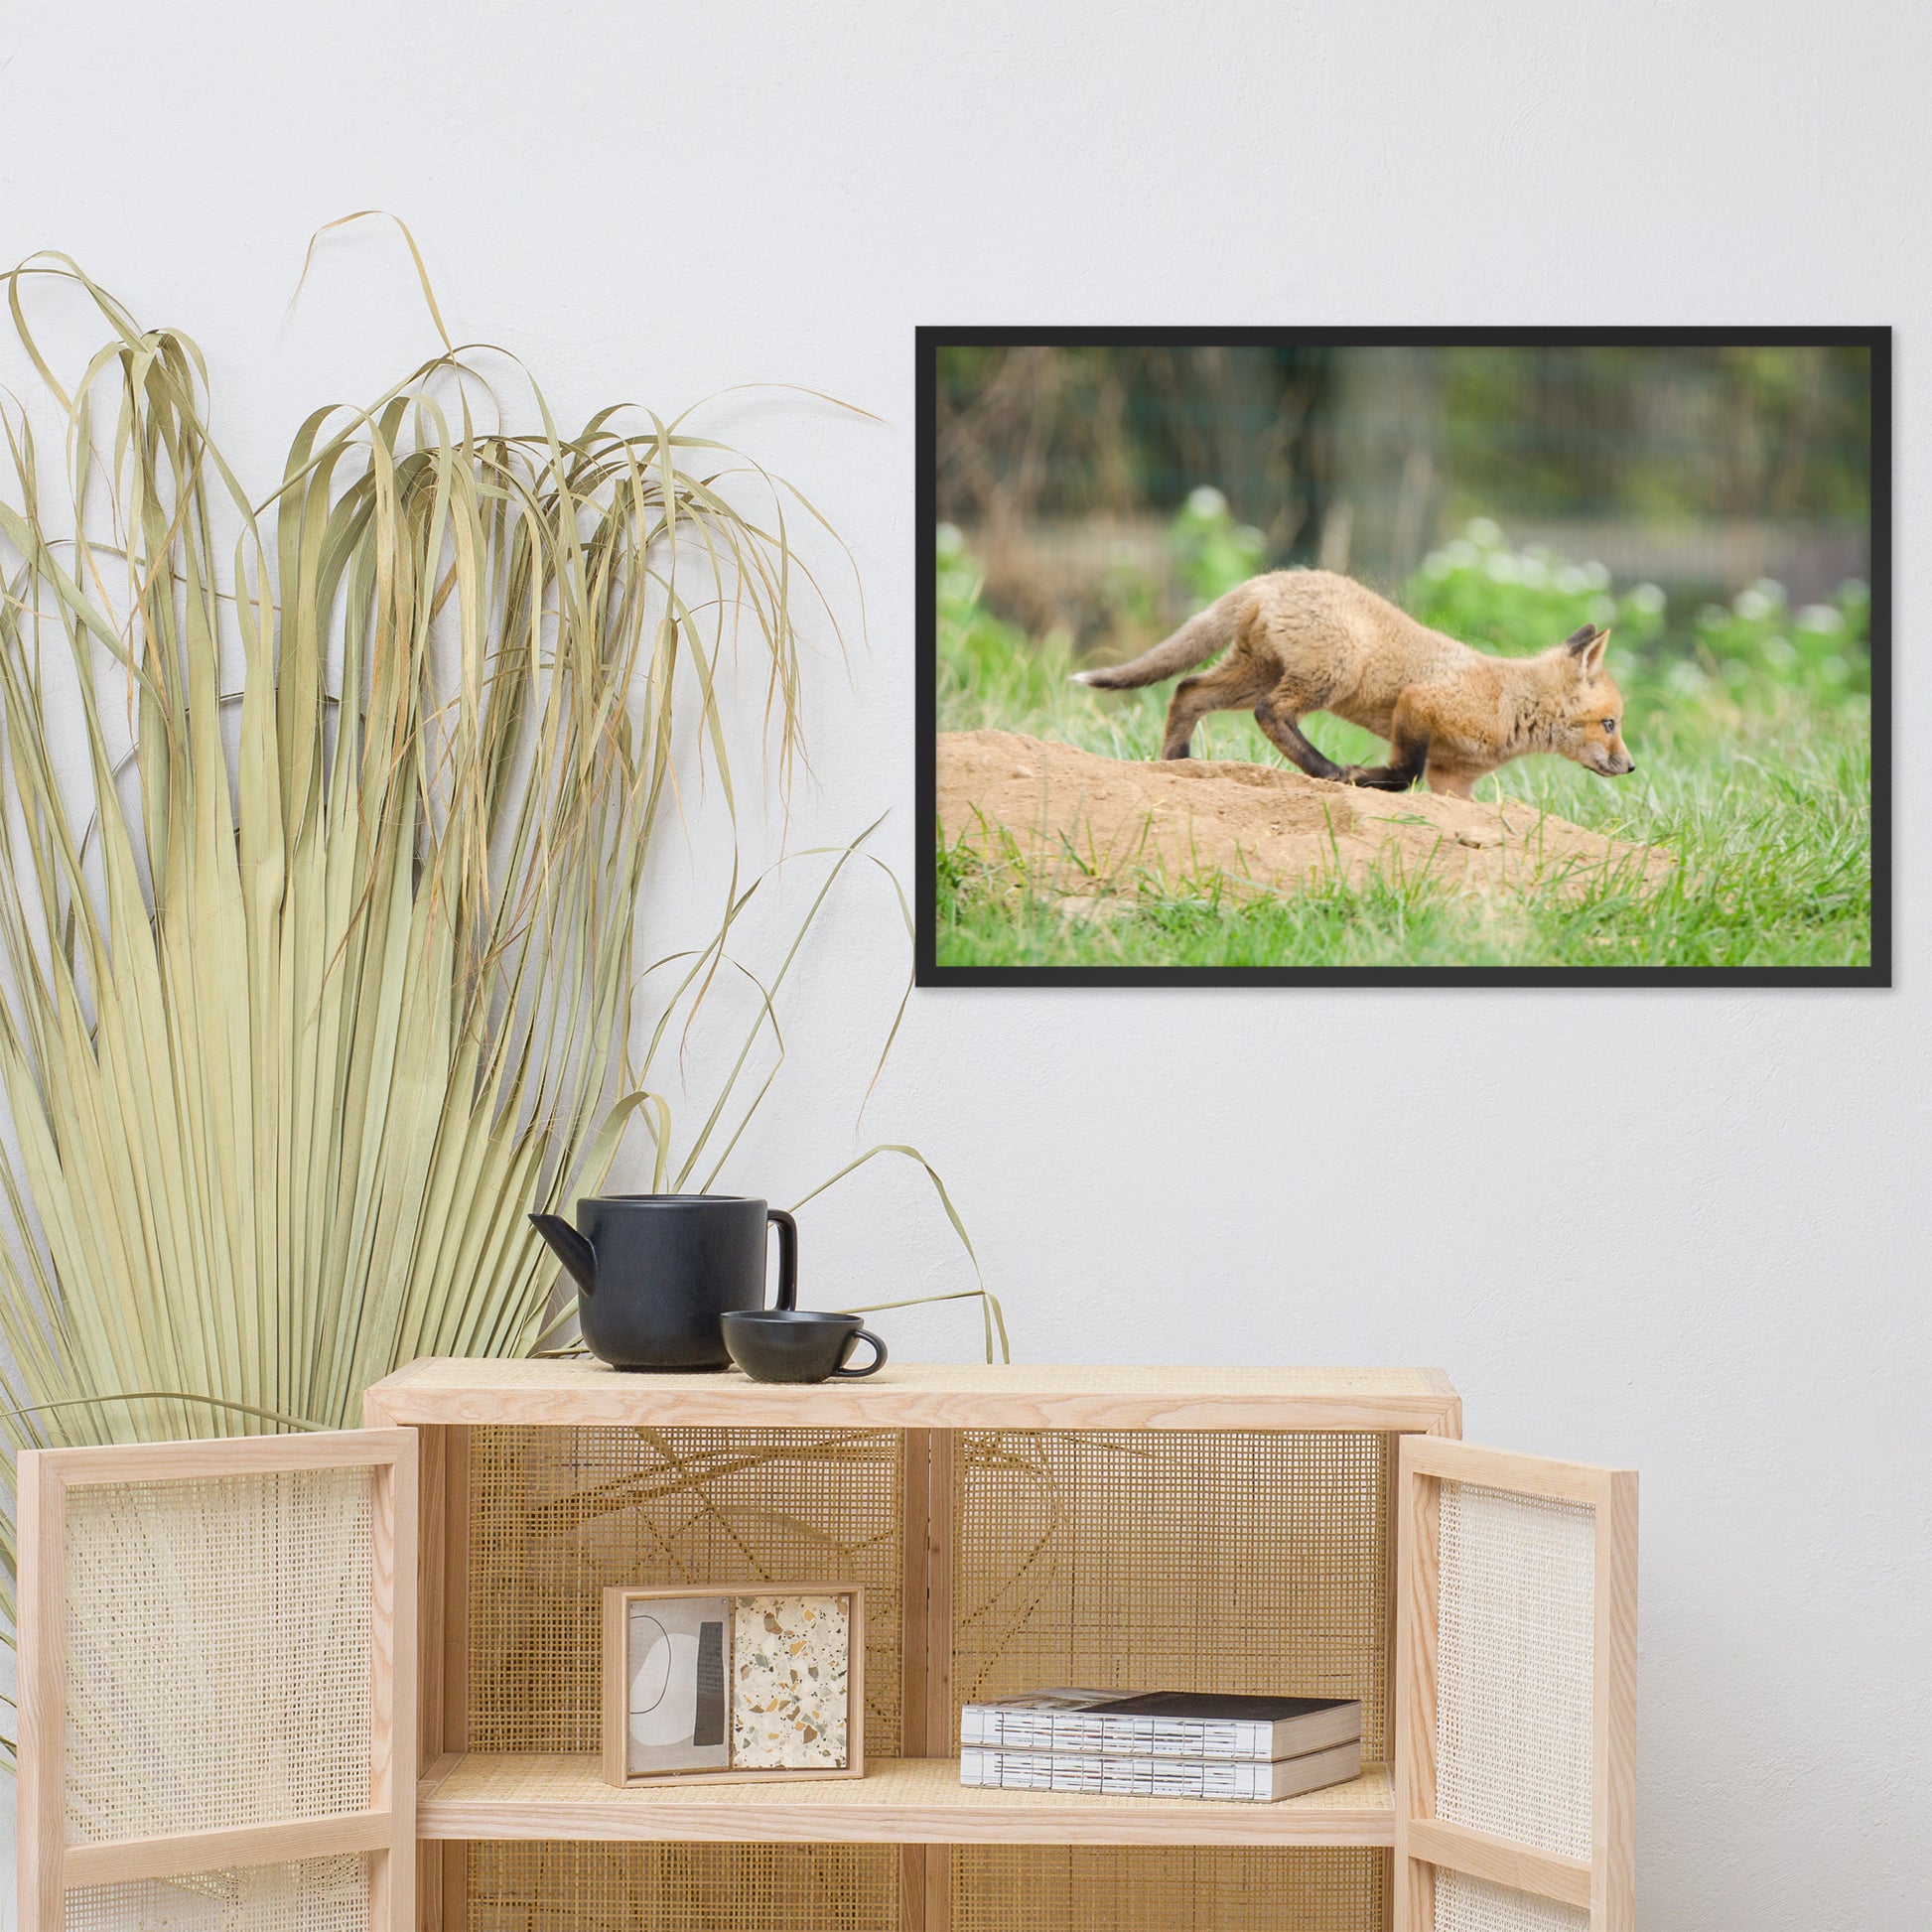 Large Nursery Wall Art: Baby Fox Pup In Meadow - Animal / Wildlife / Nature Artwork - Wall Decor - Framed Wall Art Print